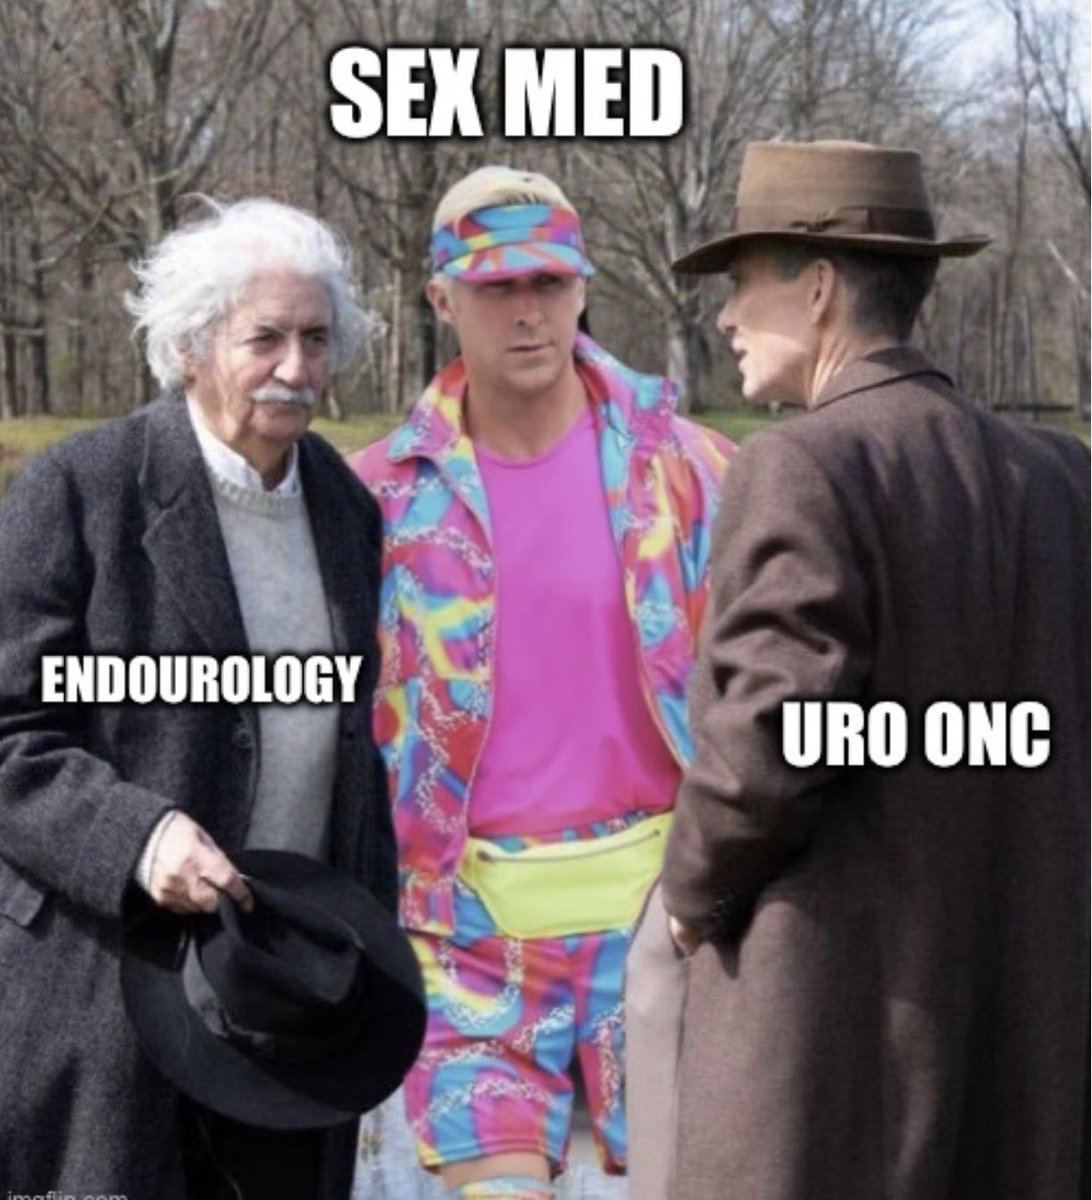 The Urologic sub-specialists!